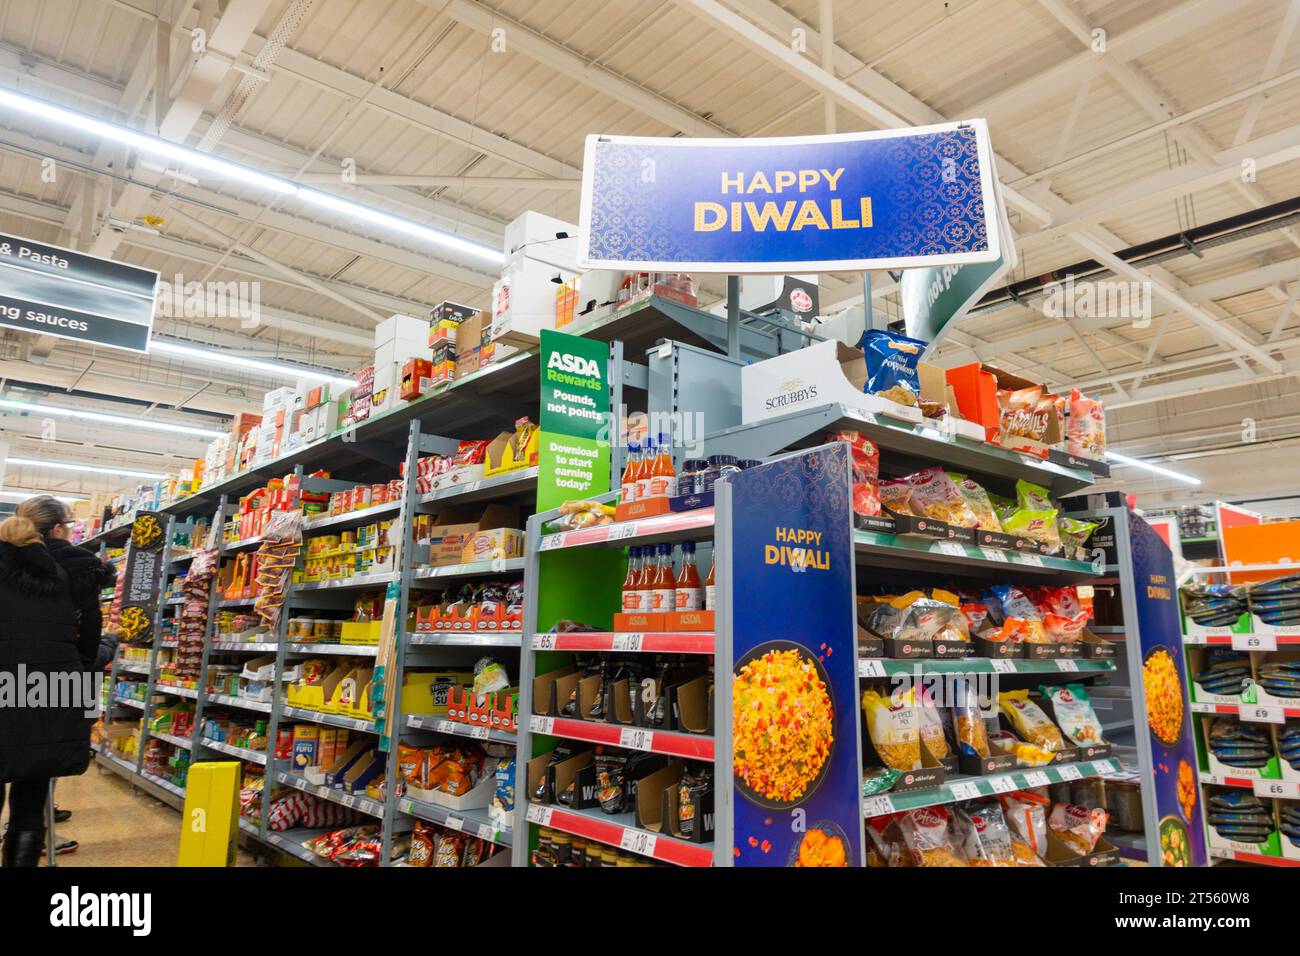 Happy diwali promotion at asda store, london, uk Stock Photo